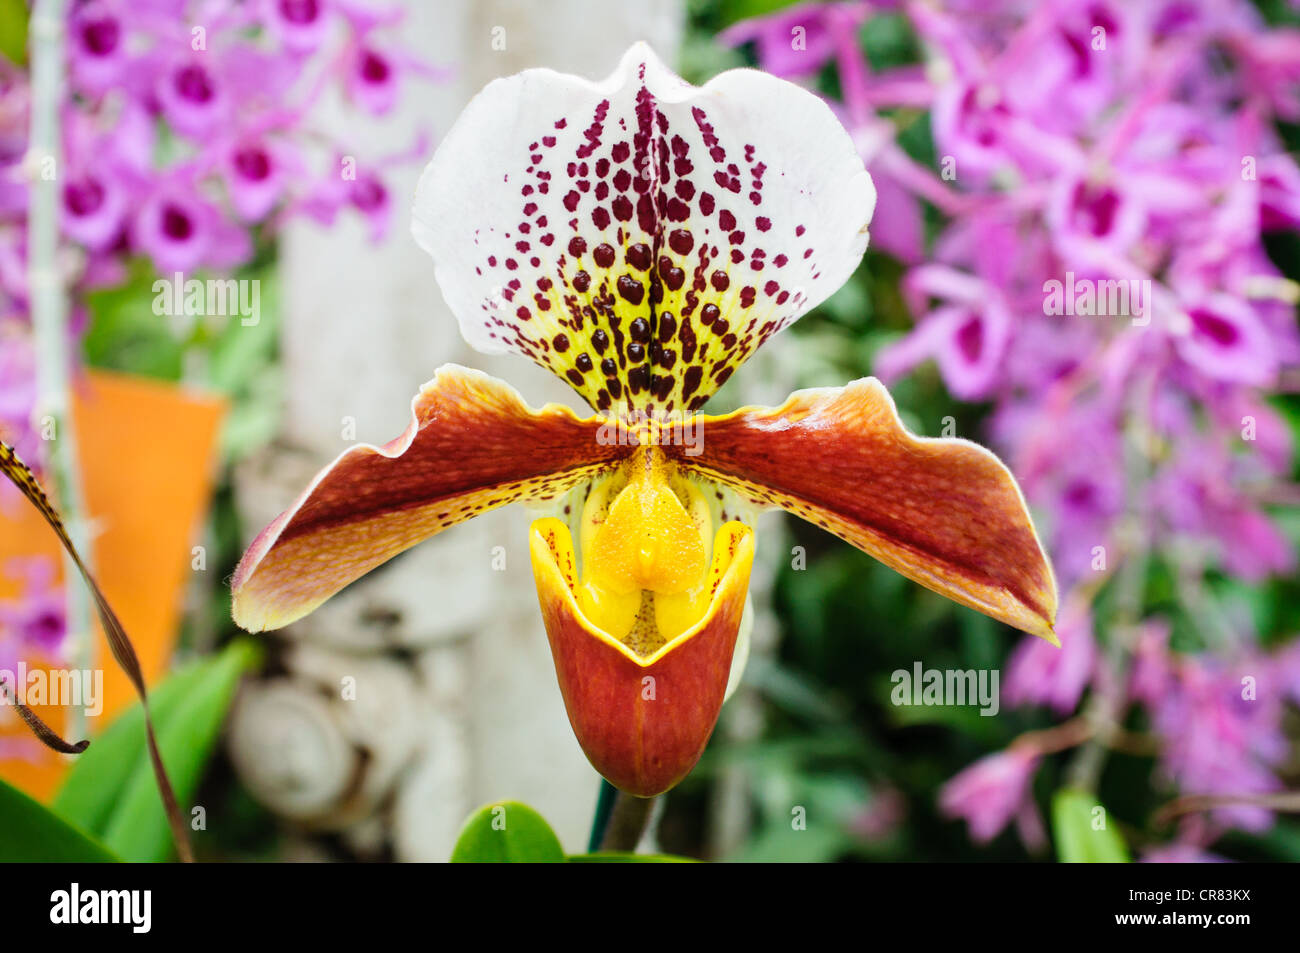 A Bulldog Slipper orchid (Paphiopedilum). Stock Photo